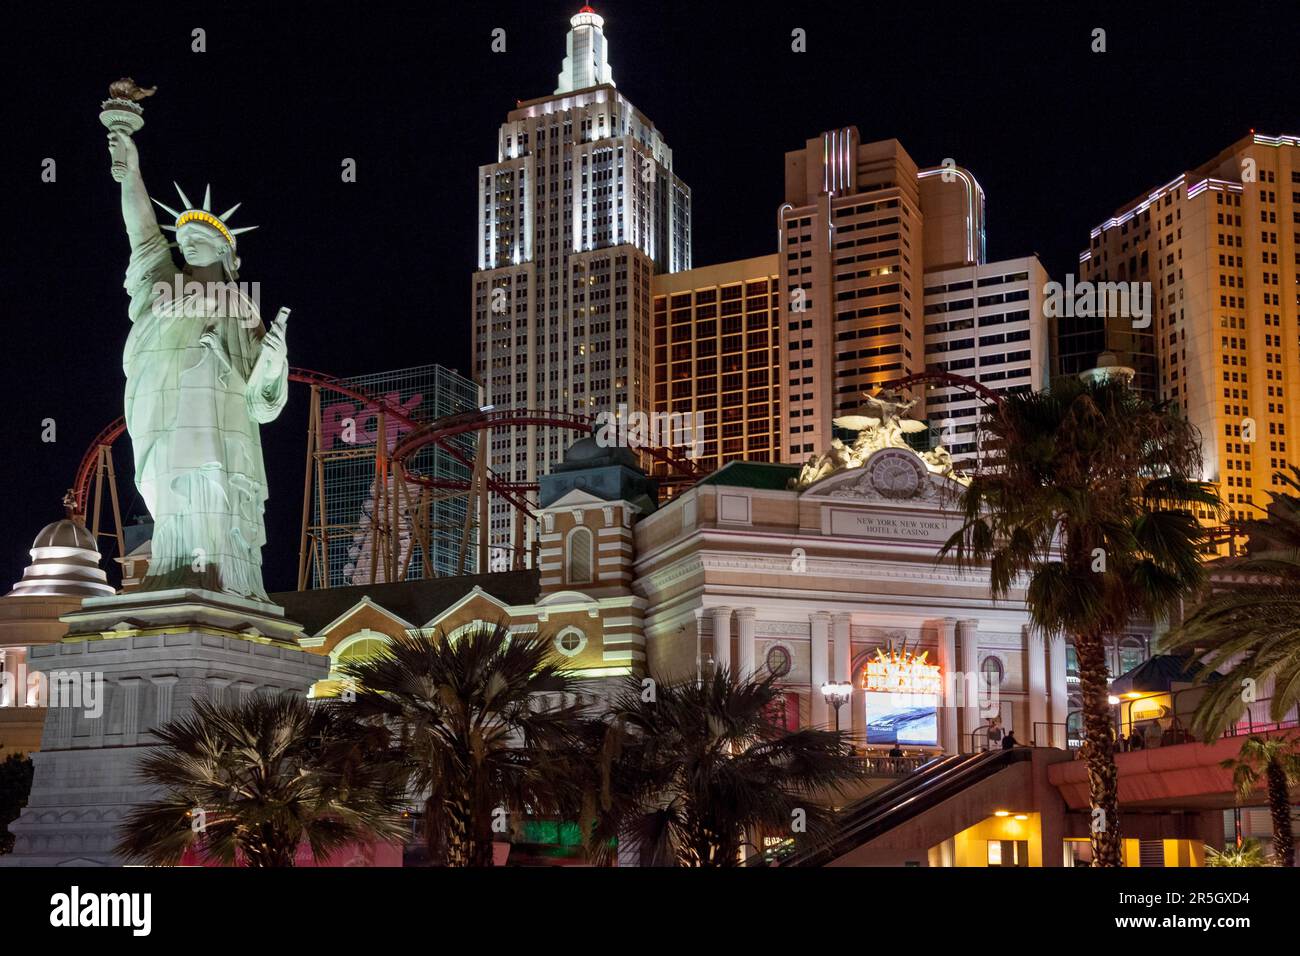 Replica Statue of Liberty at night in Las Vegas Stock Photo